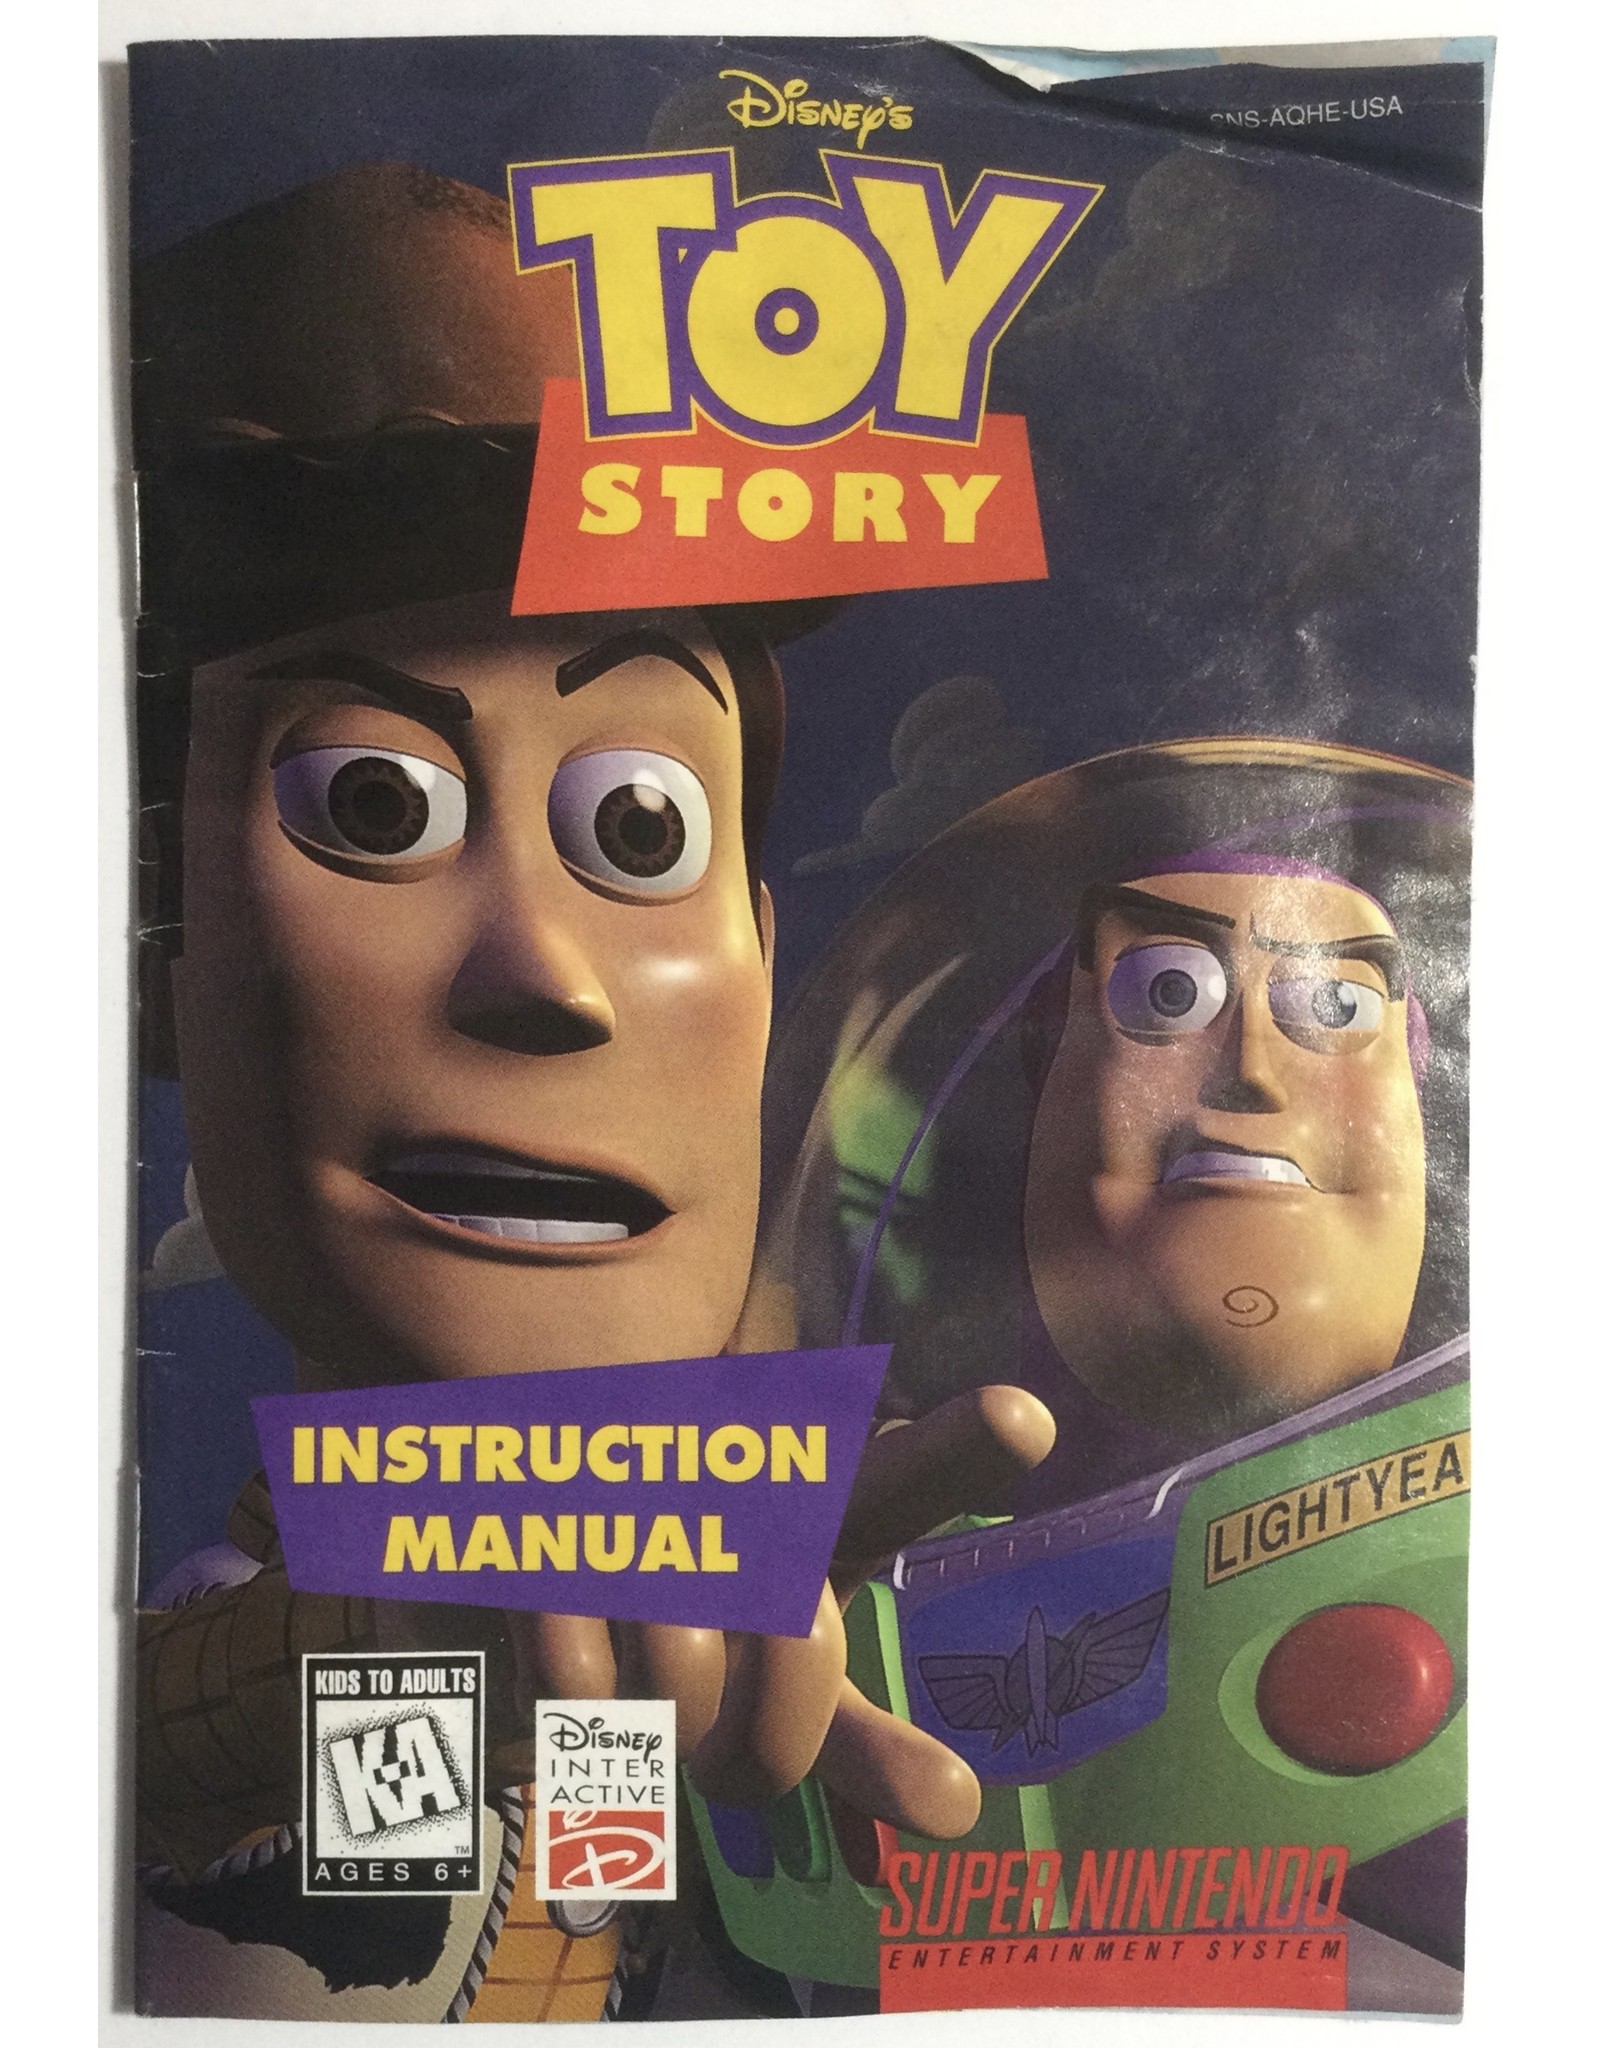 Disney Toy Story for Super Nintendo Entertainment System (SNES)